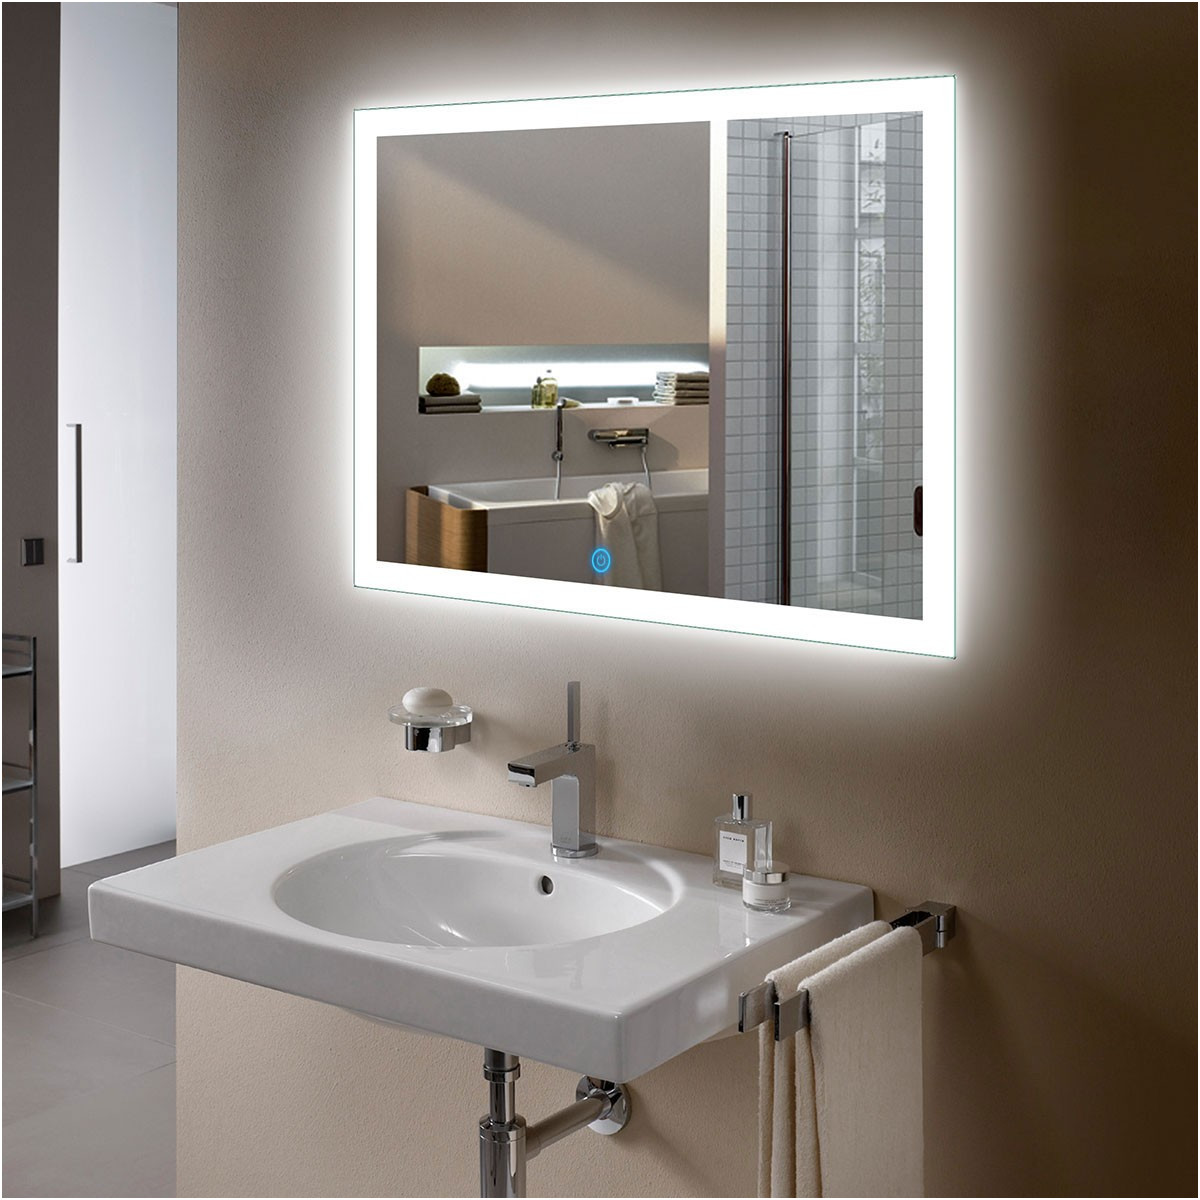 Luxury 2 Way Mirror In Bathroom